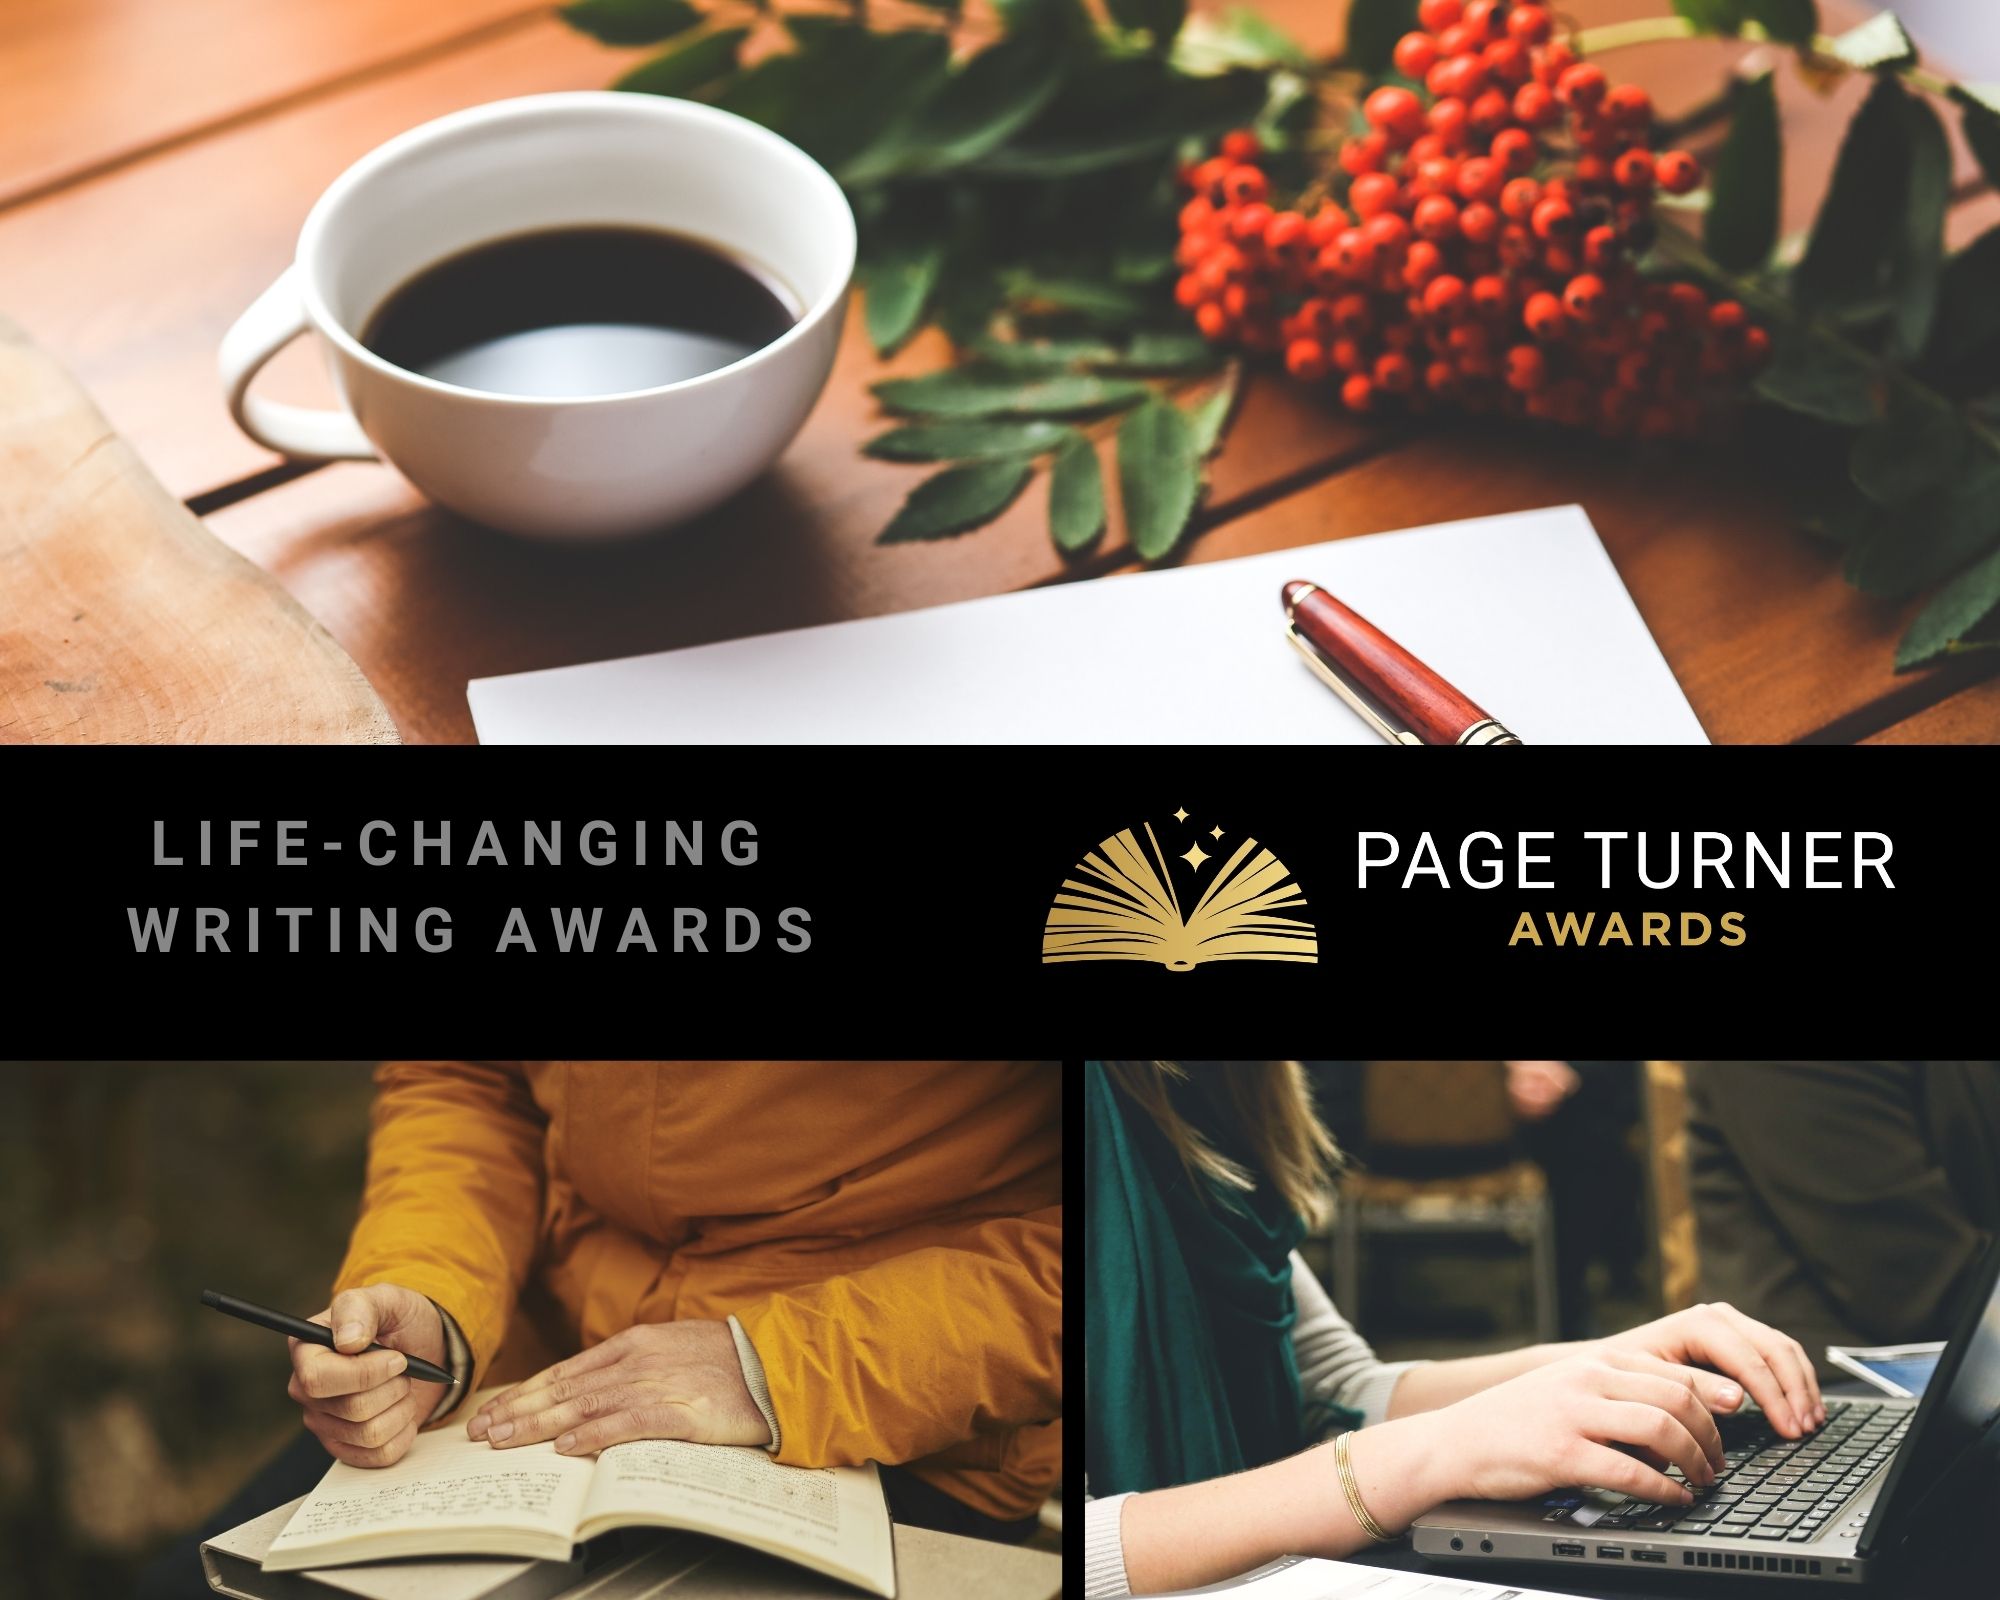 Life-changing writing awards